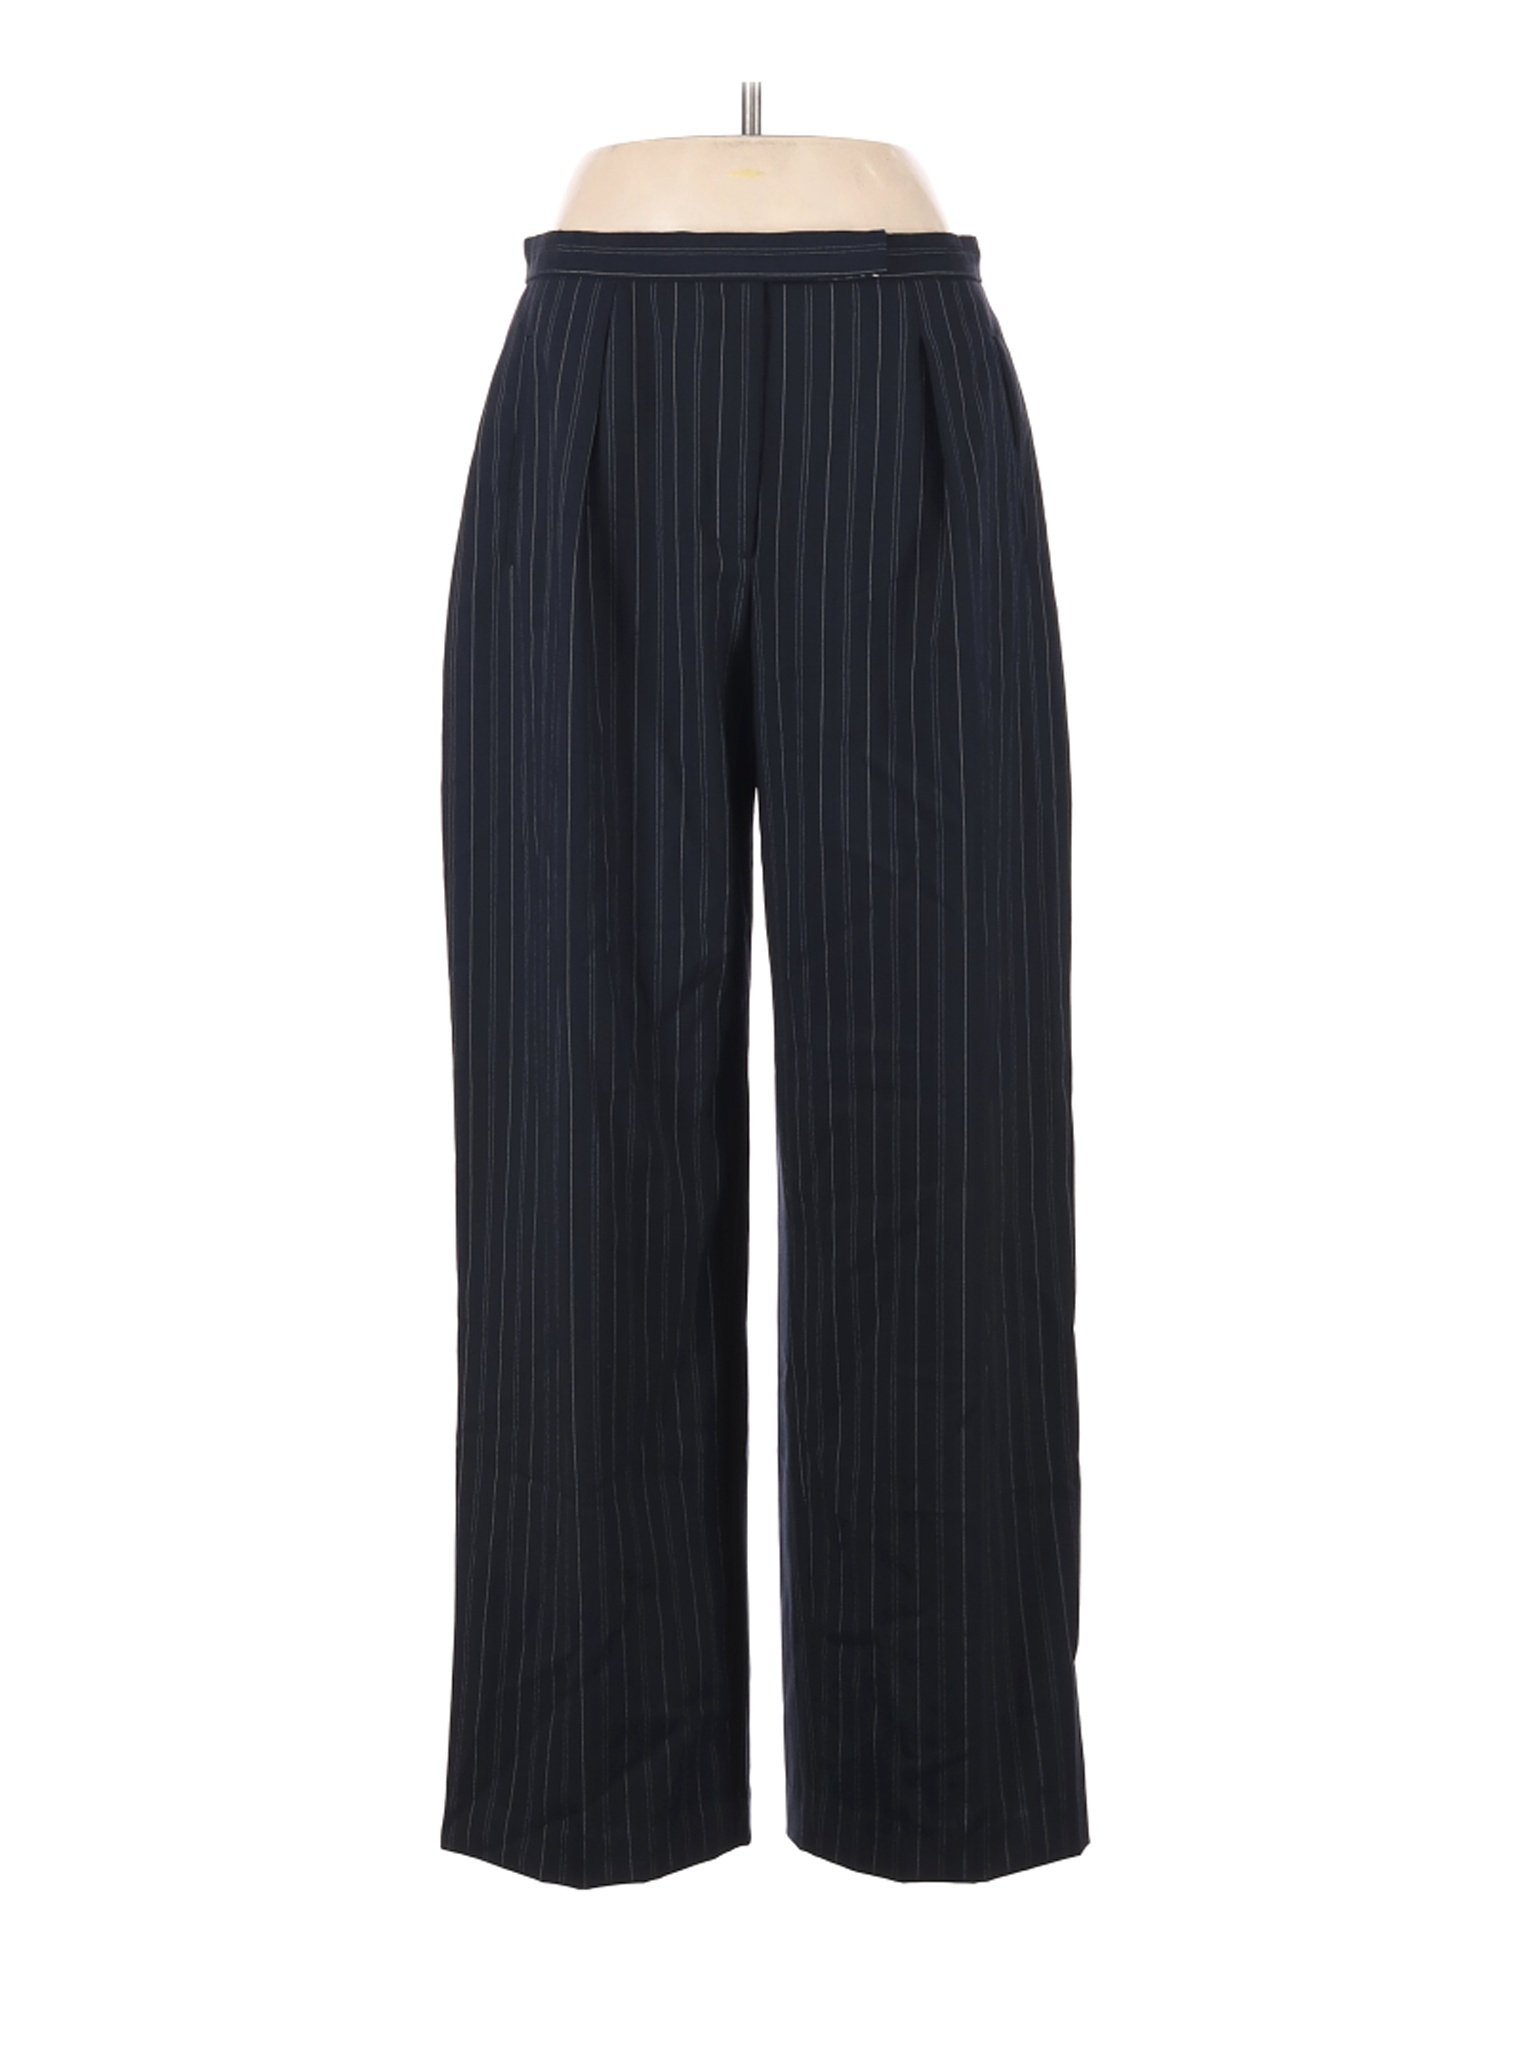 Armani Collezioni Women Black Wool Pants 44 italian | eBay